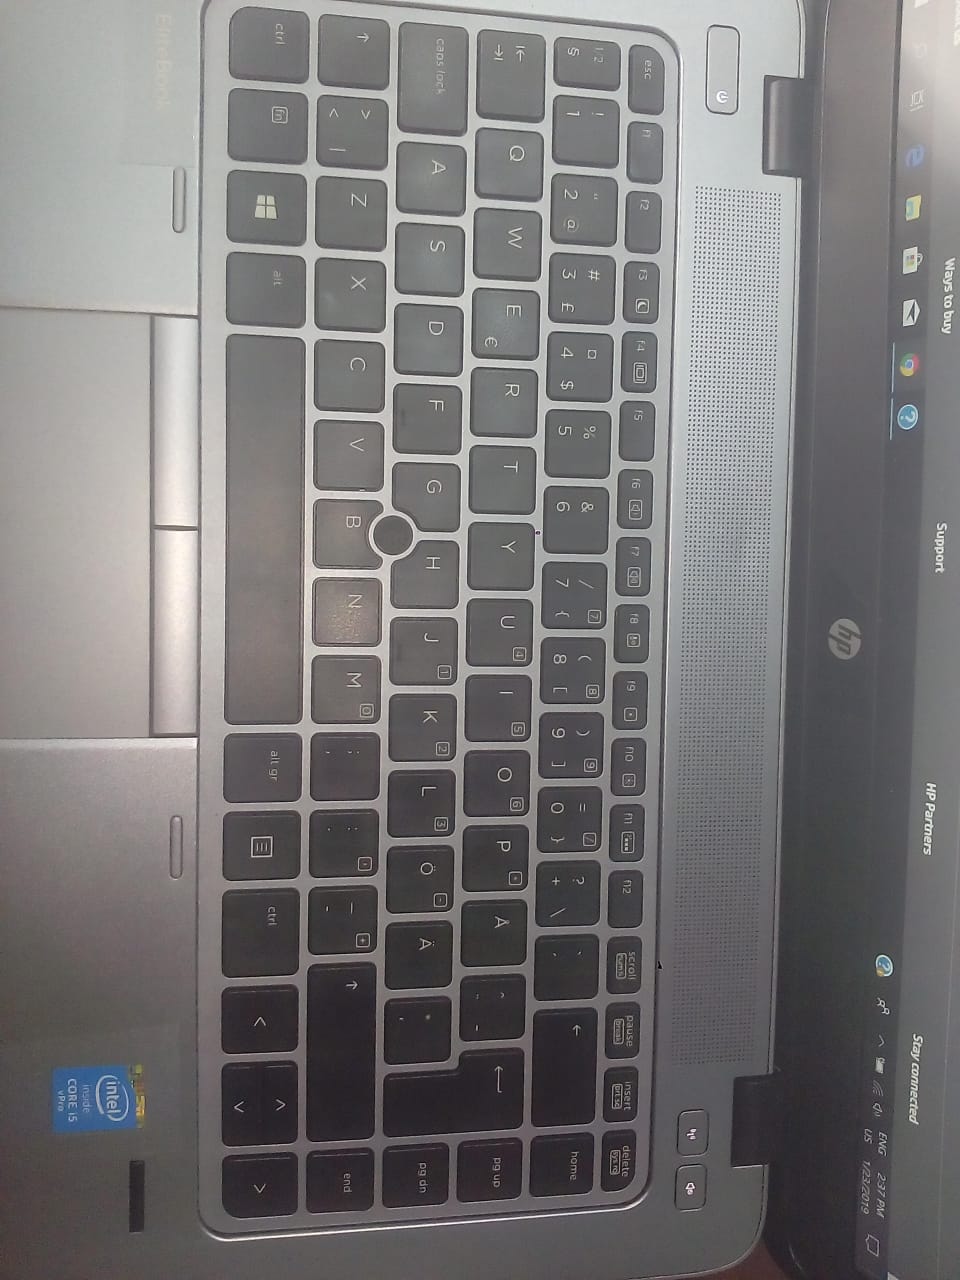 Elitebook 840 G2 Notebook Keyboard Layout